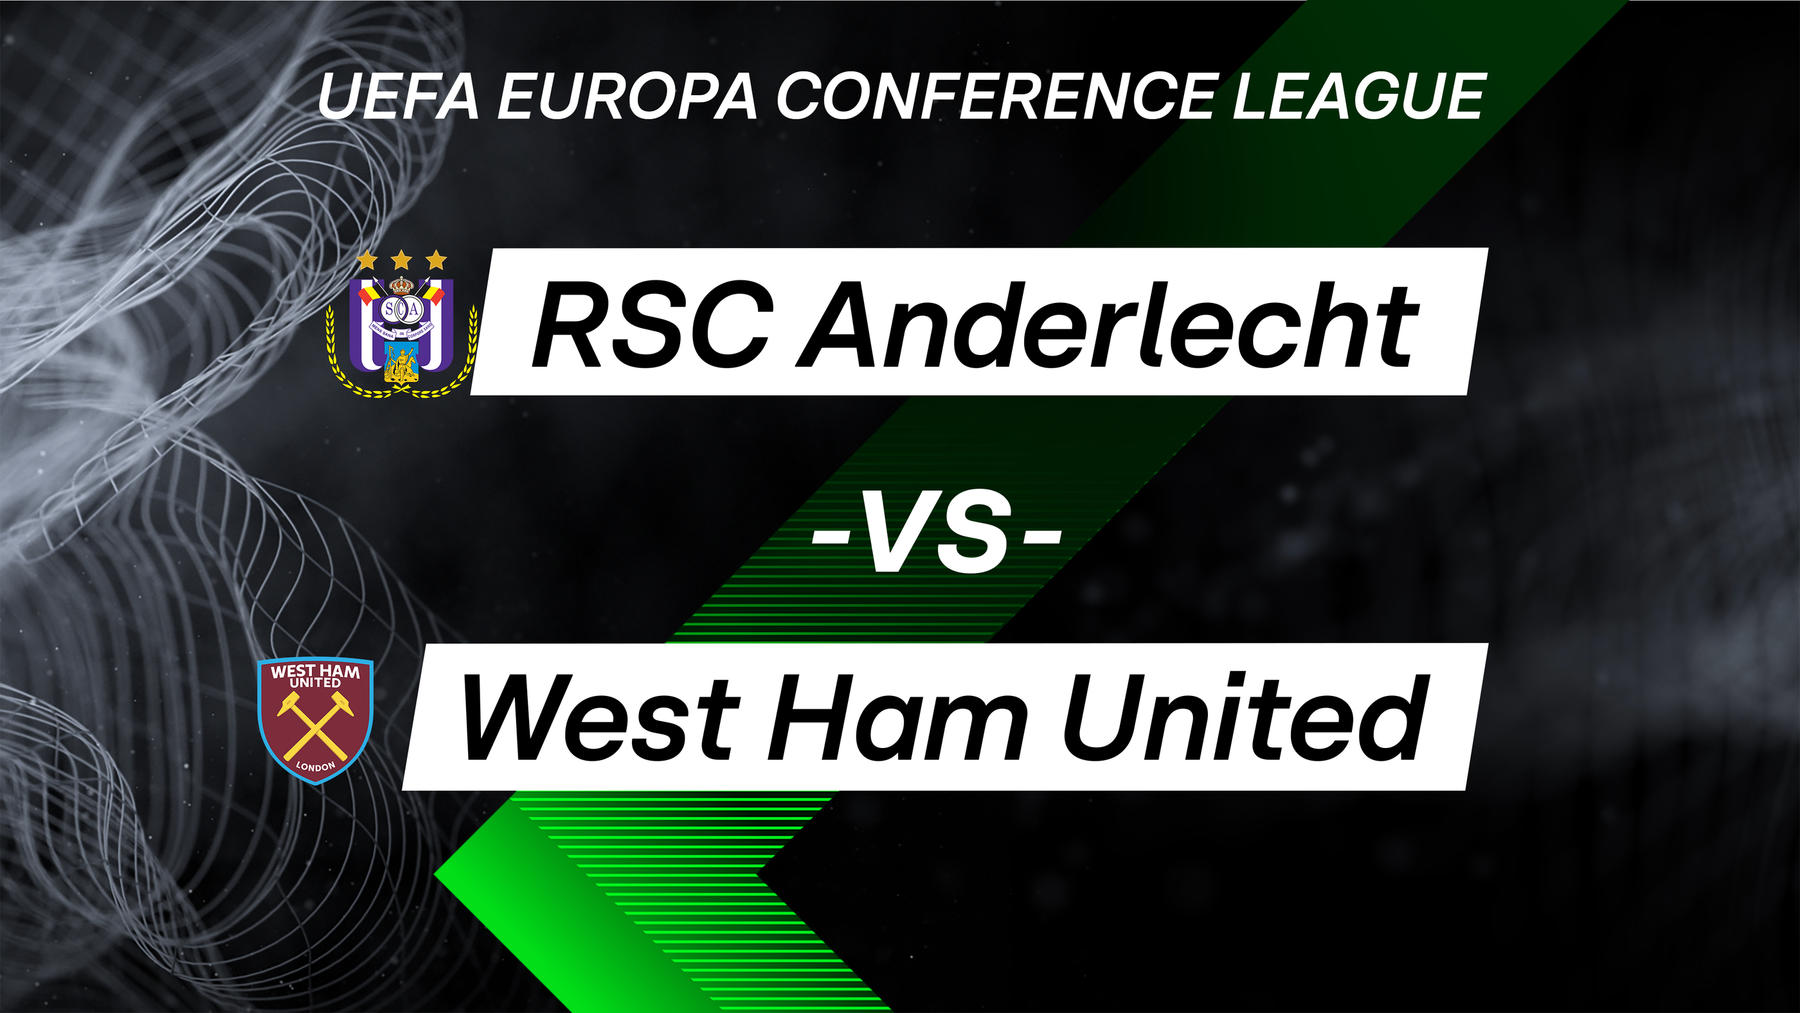 RSC Anderlecht vs. West Ham United